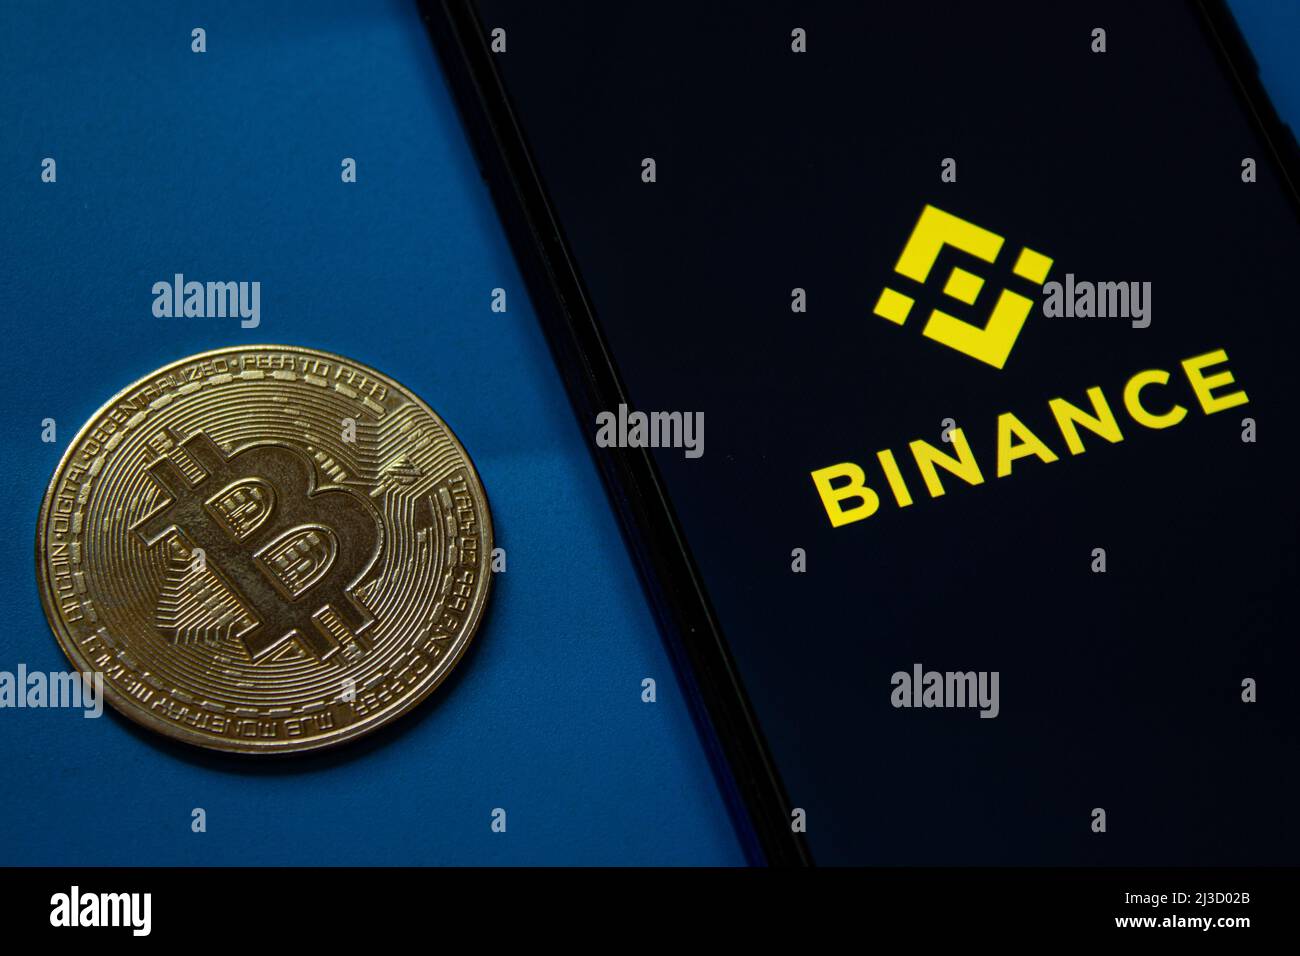 Binance mobile application logo on smartphone screen. Golden bitcoin coin. Afyonkarahisar, Turkey - April 6, 2022. Stock Photo